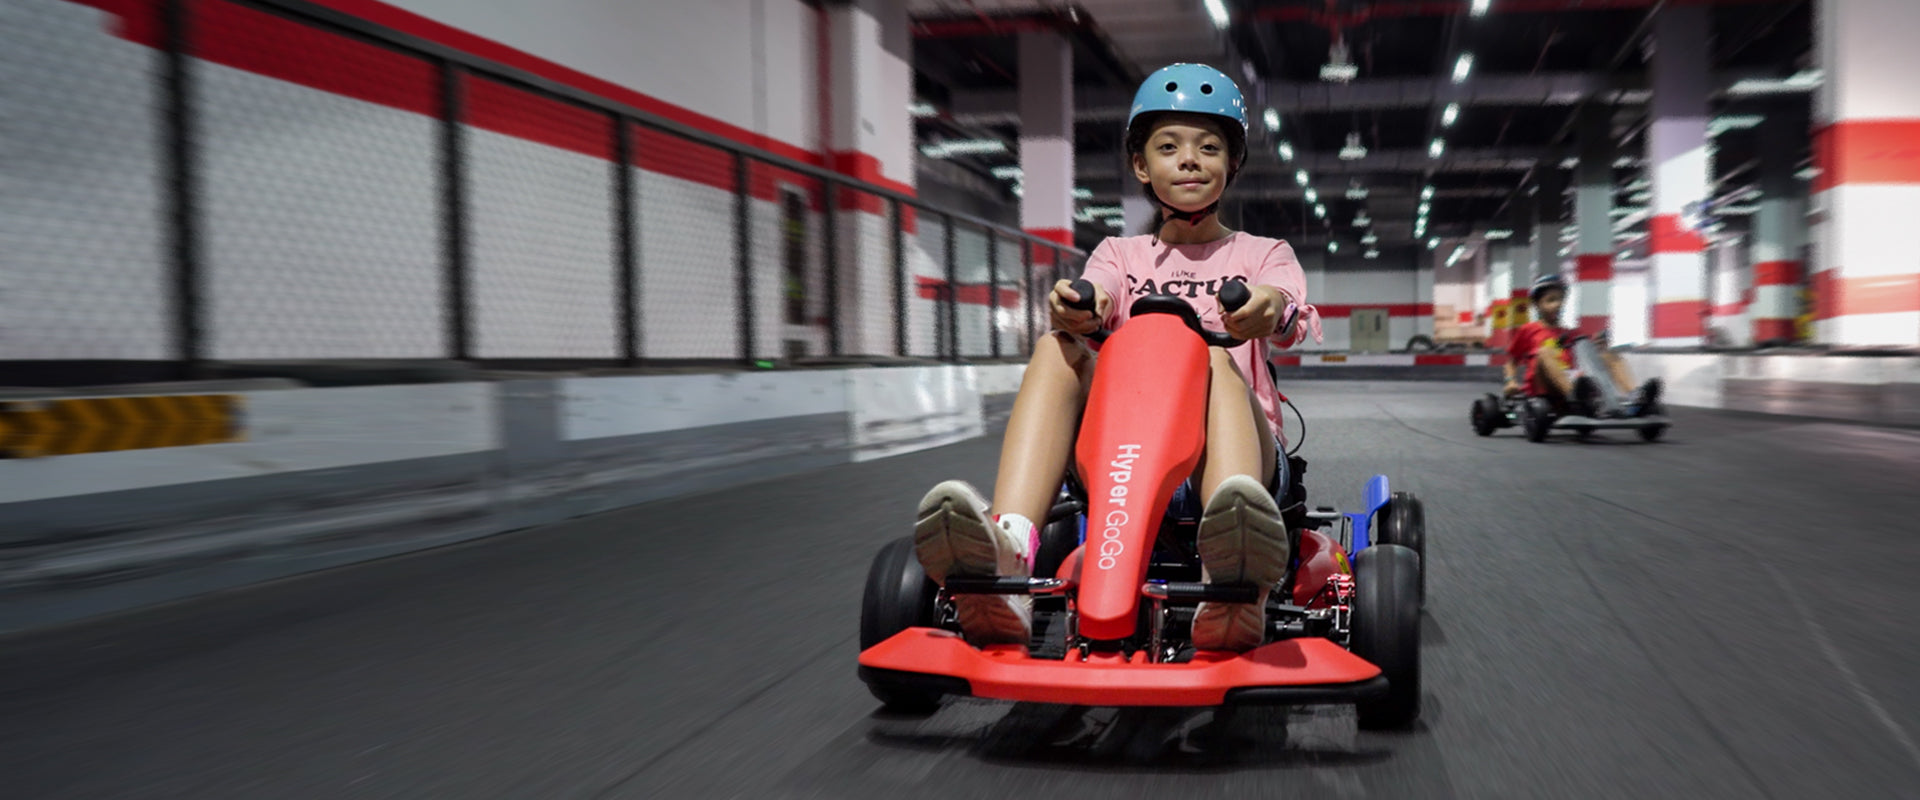 hoverboard-go-karting-car-best-birthday-gift-for-kids